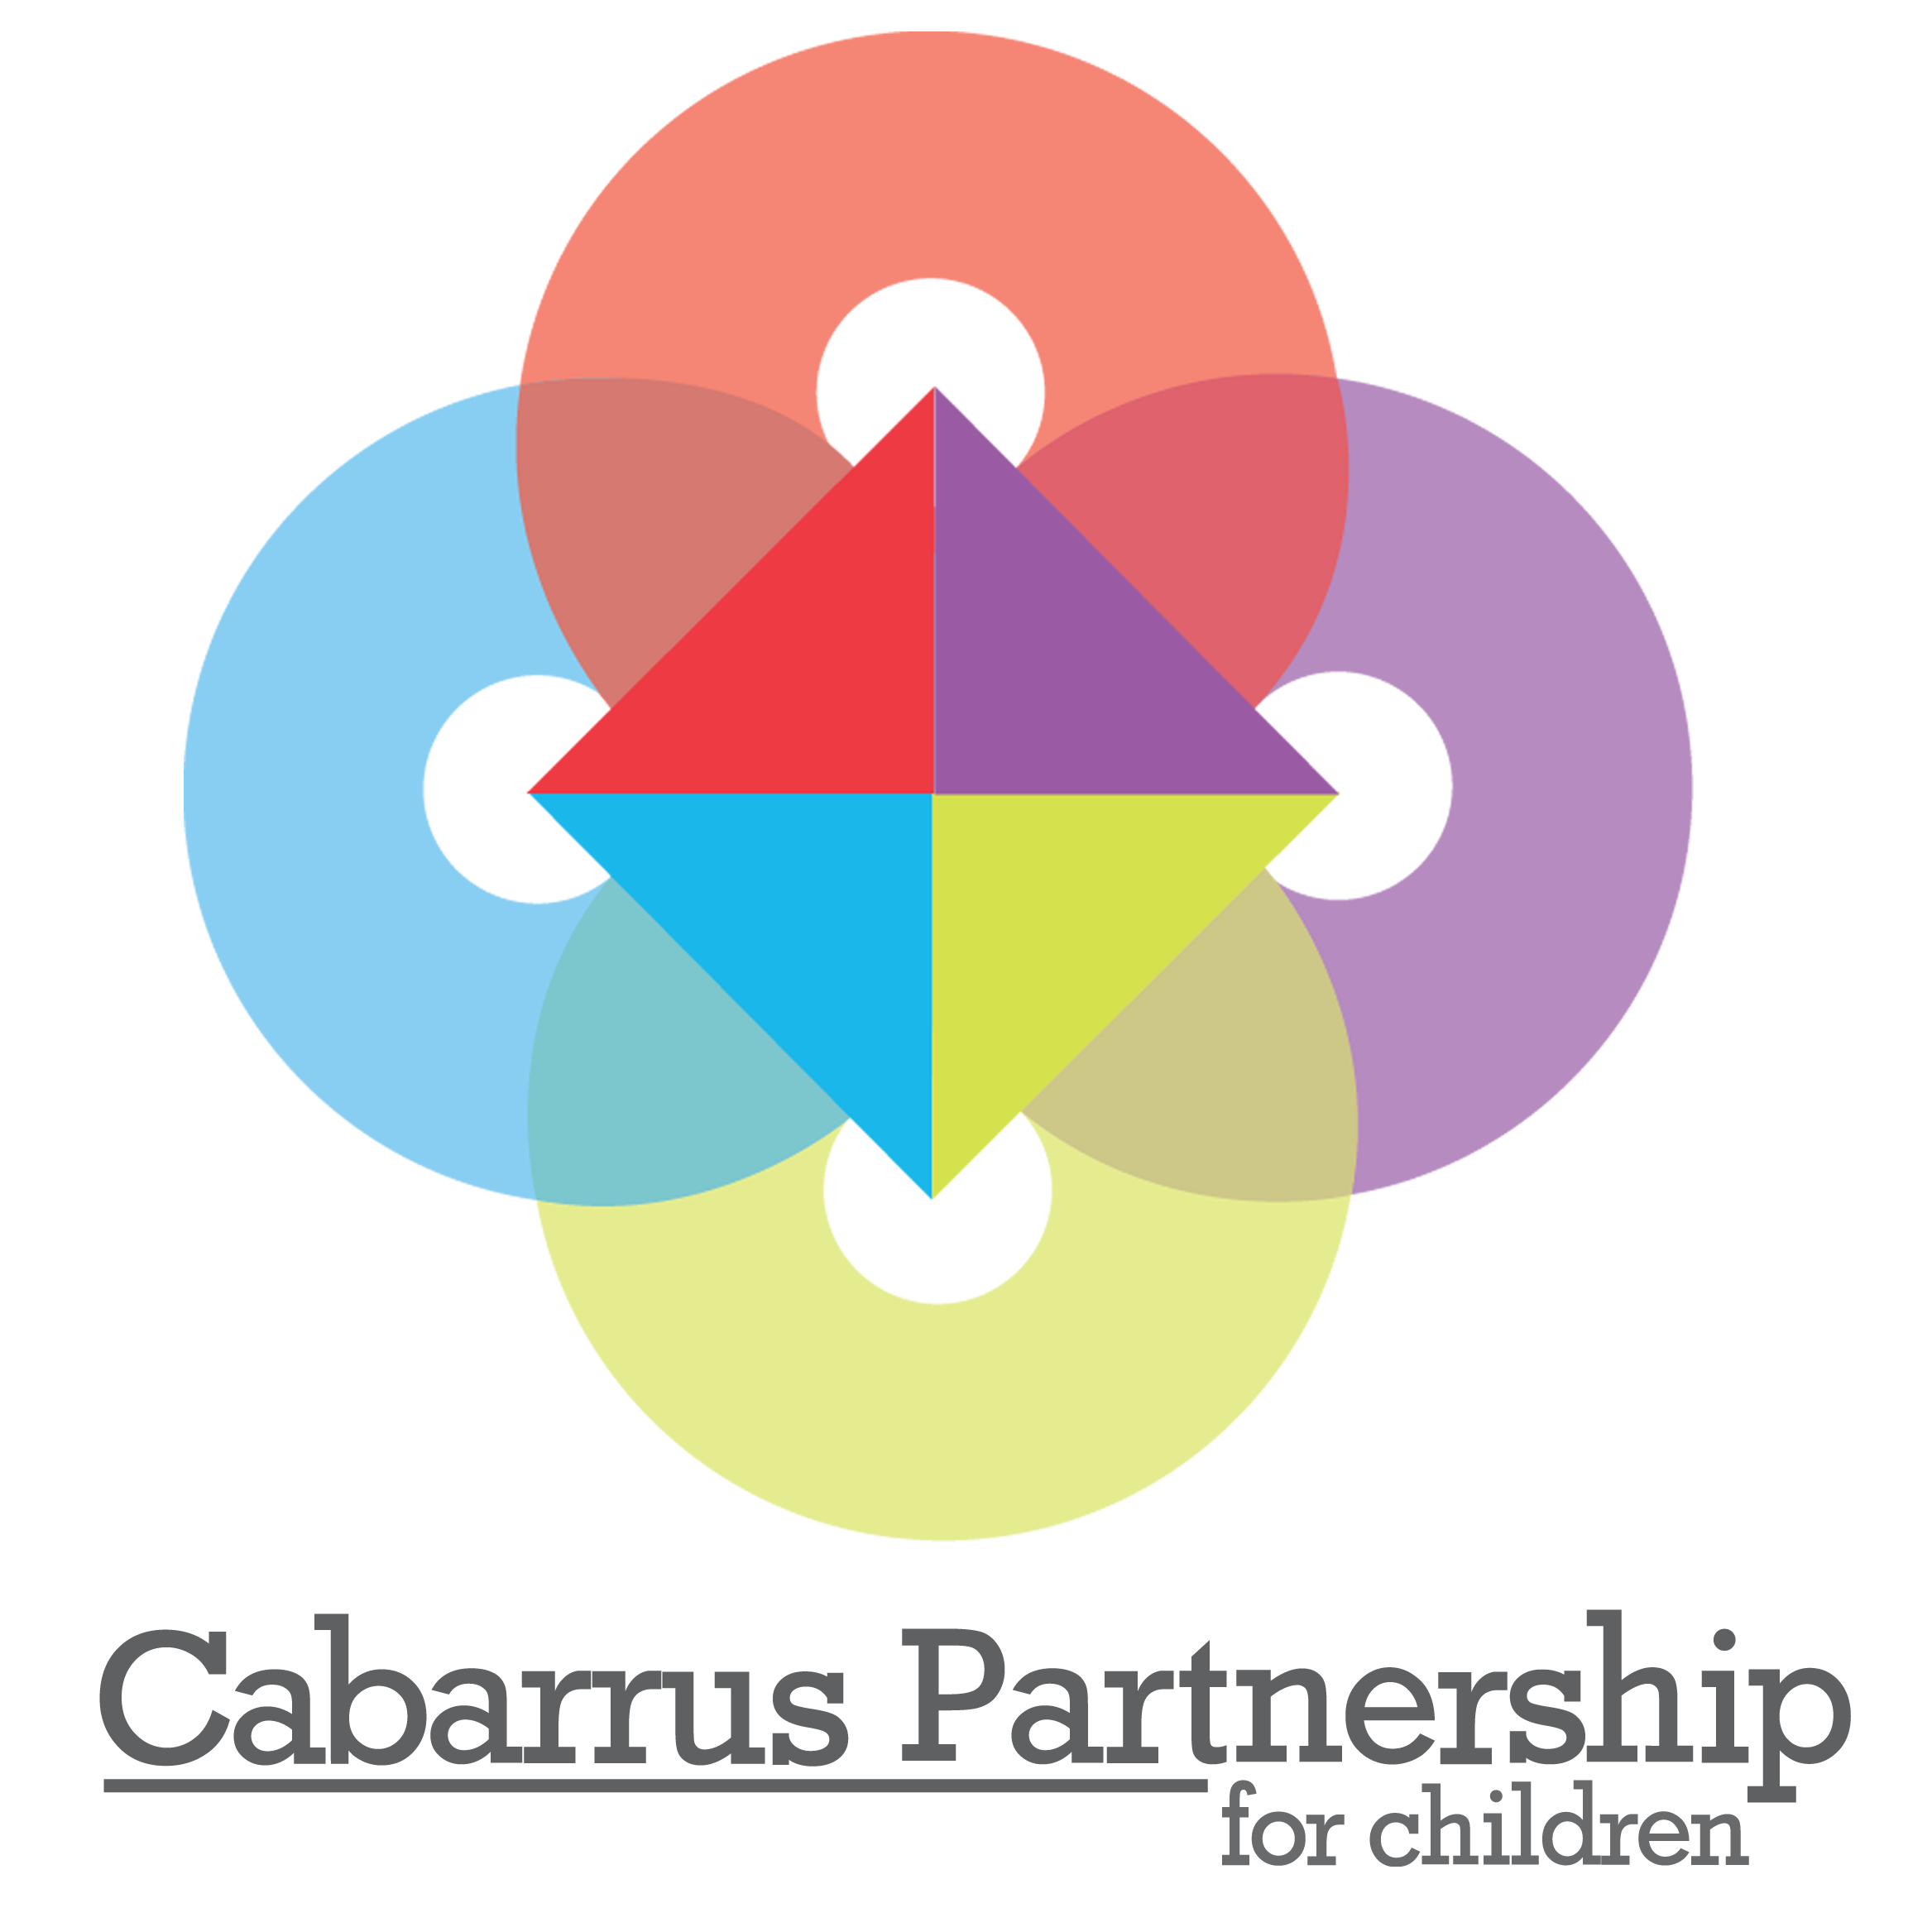 cabarrus partnership logo 2019